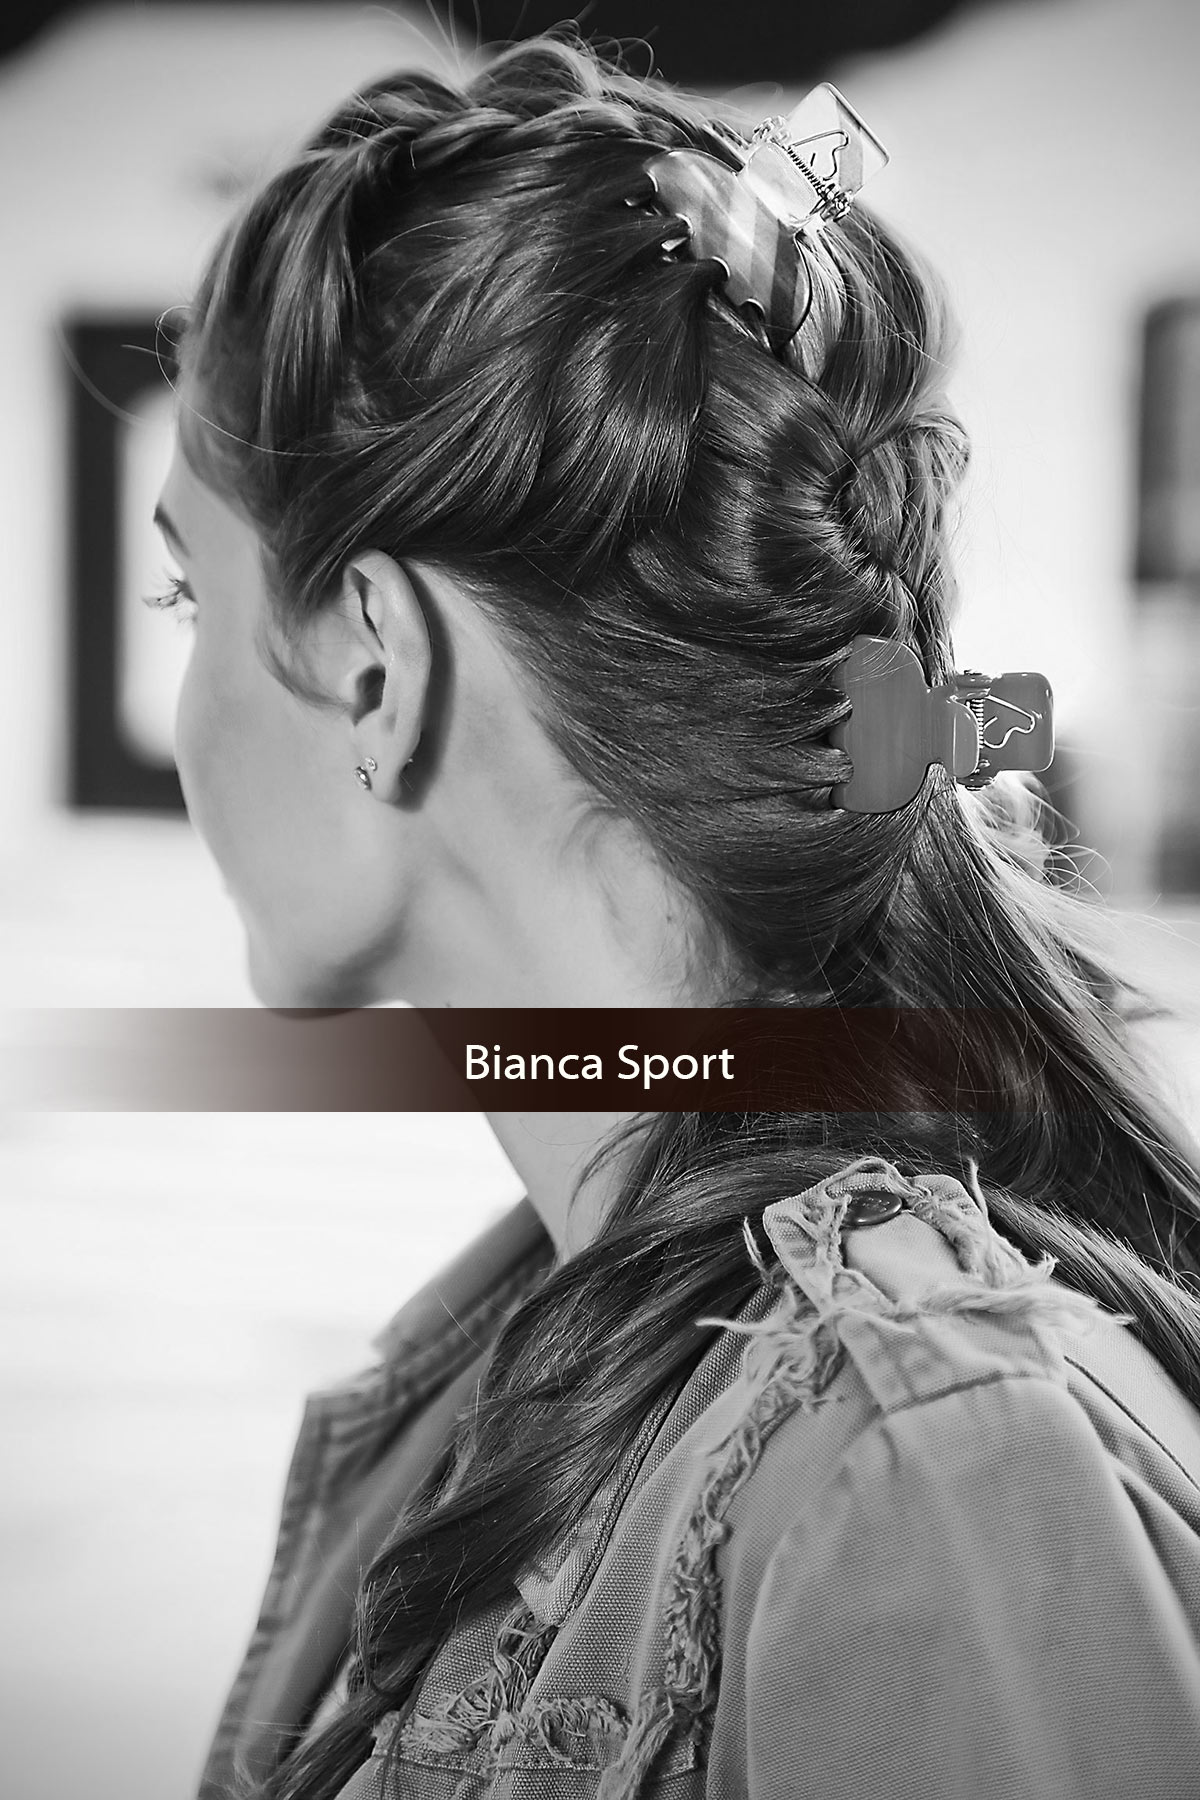 Bianca Sport